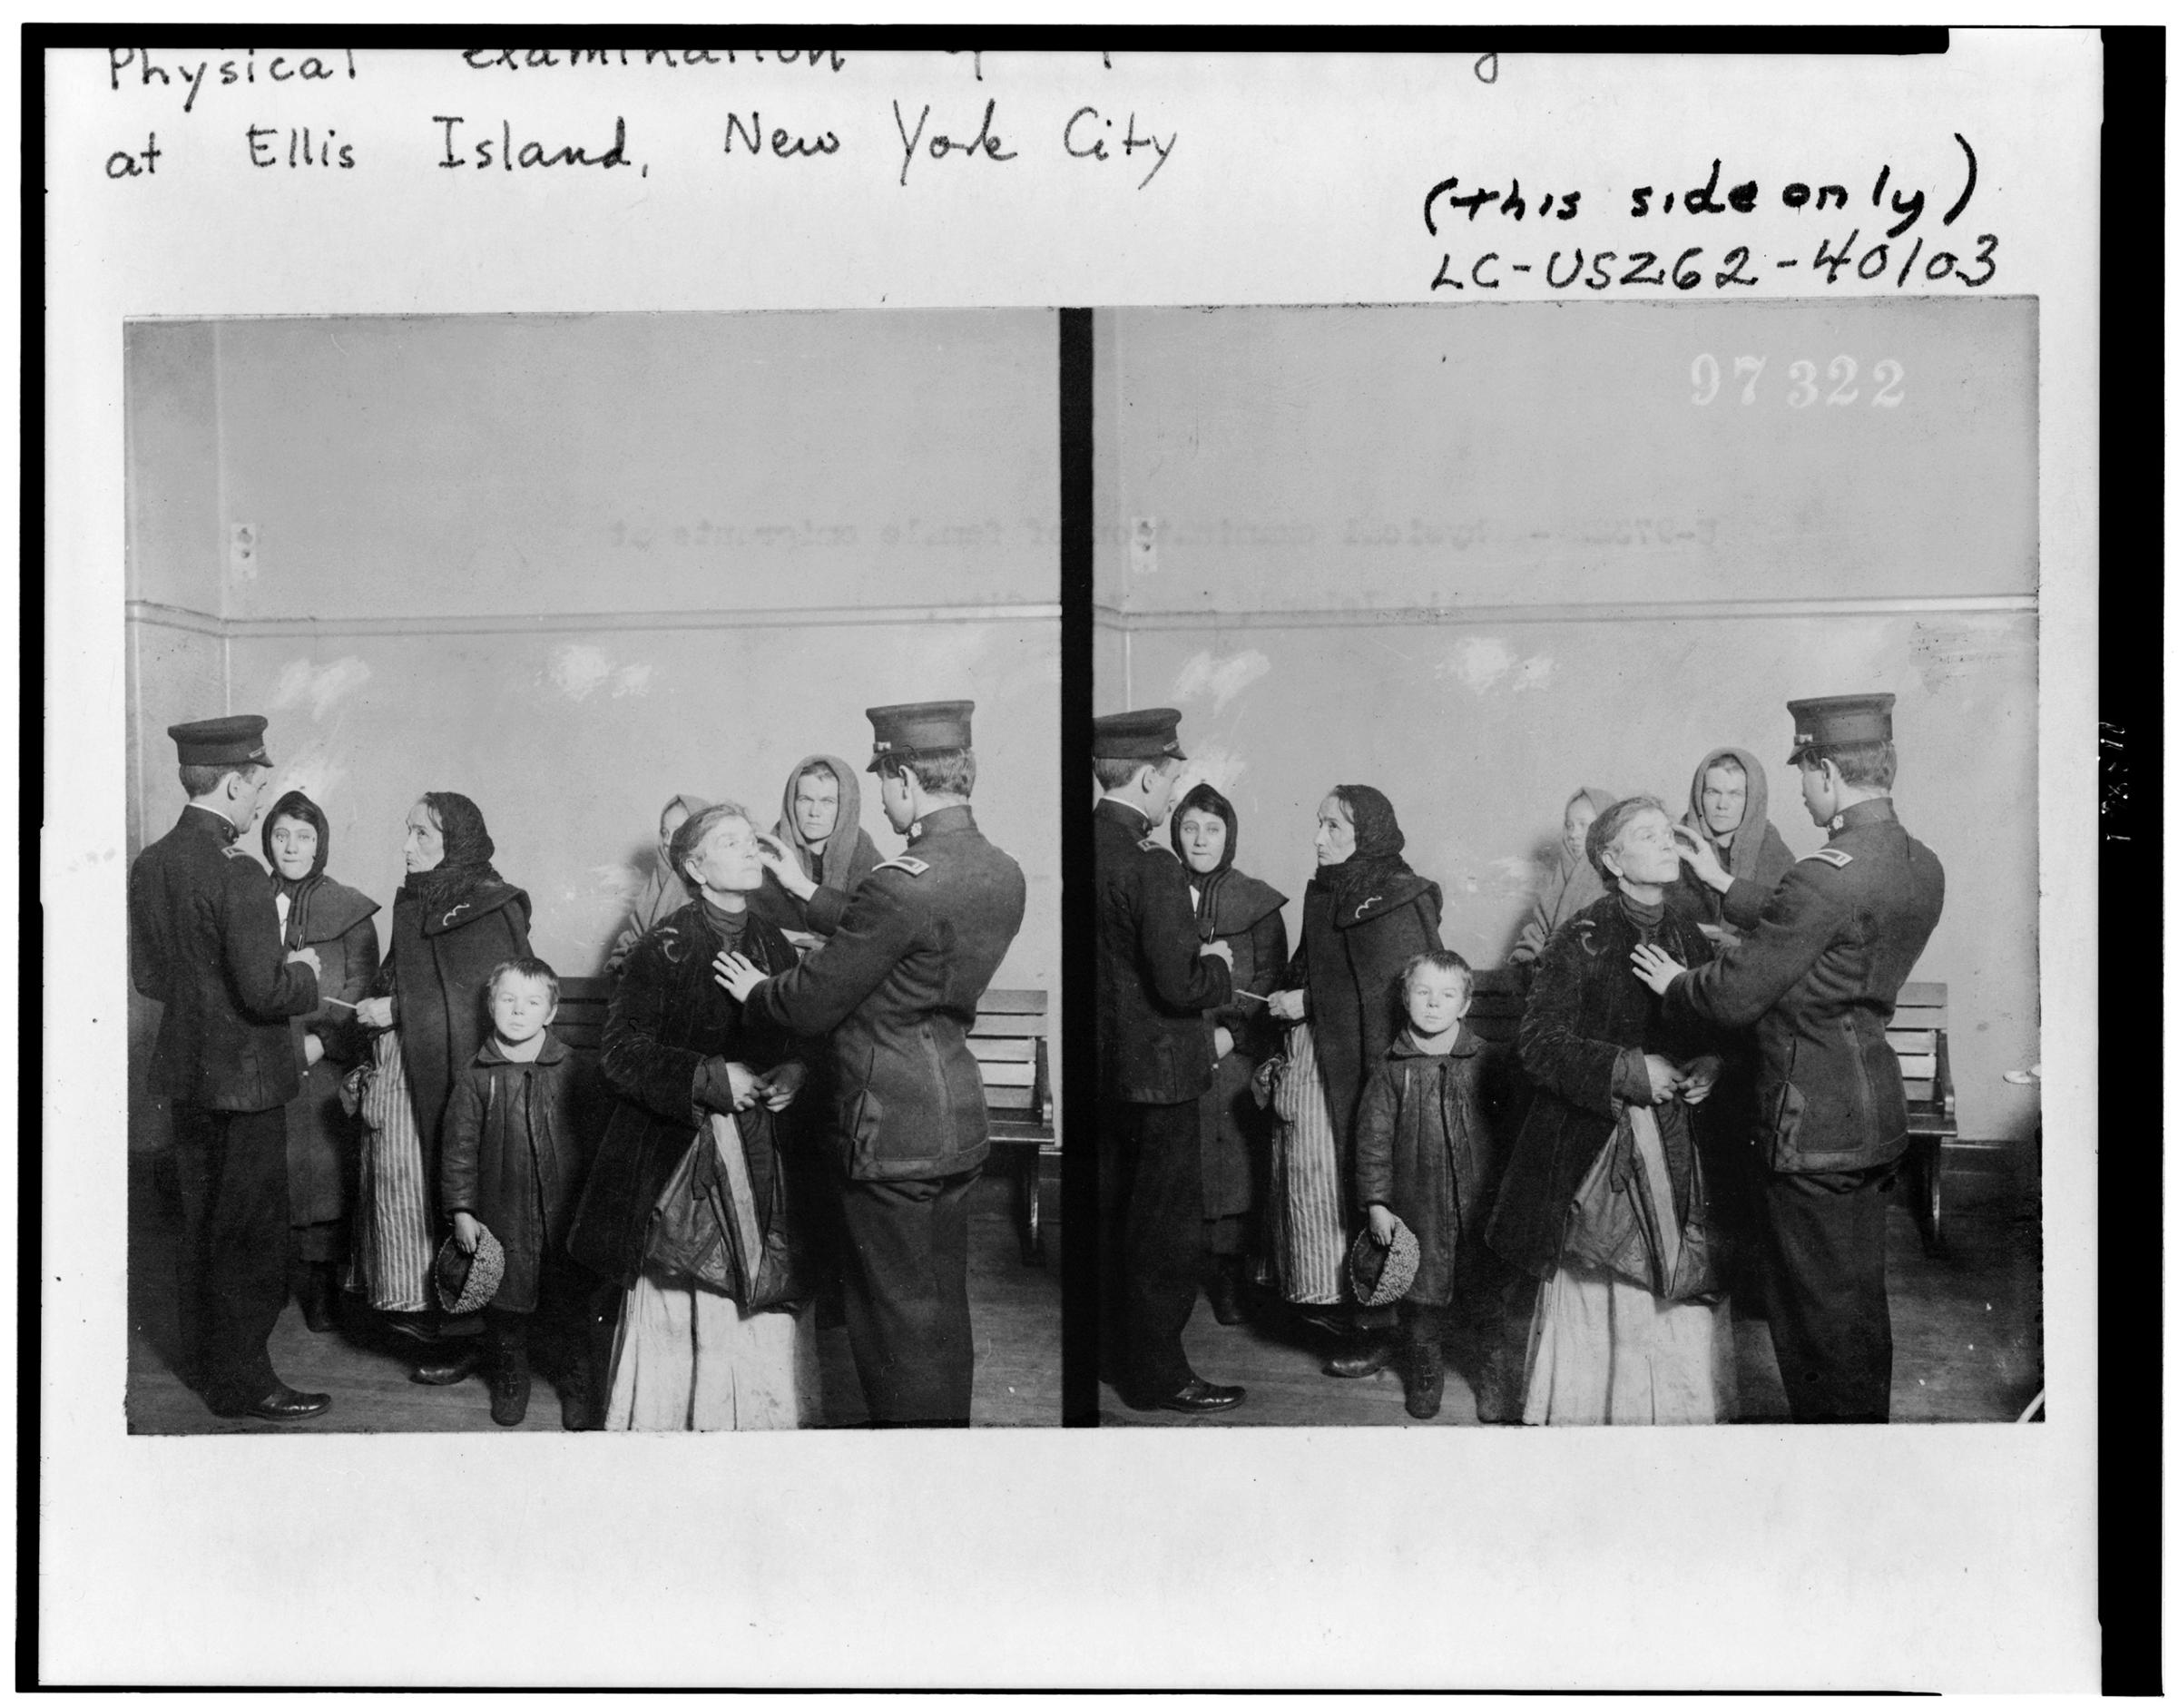 Physical examination of female immigrants at Ellis Island, New York City, circa 1911.